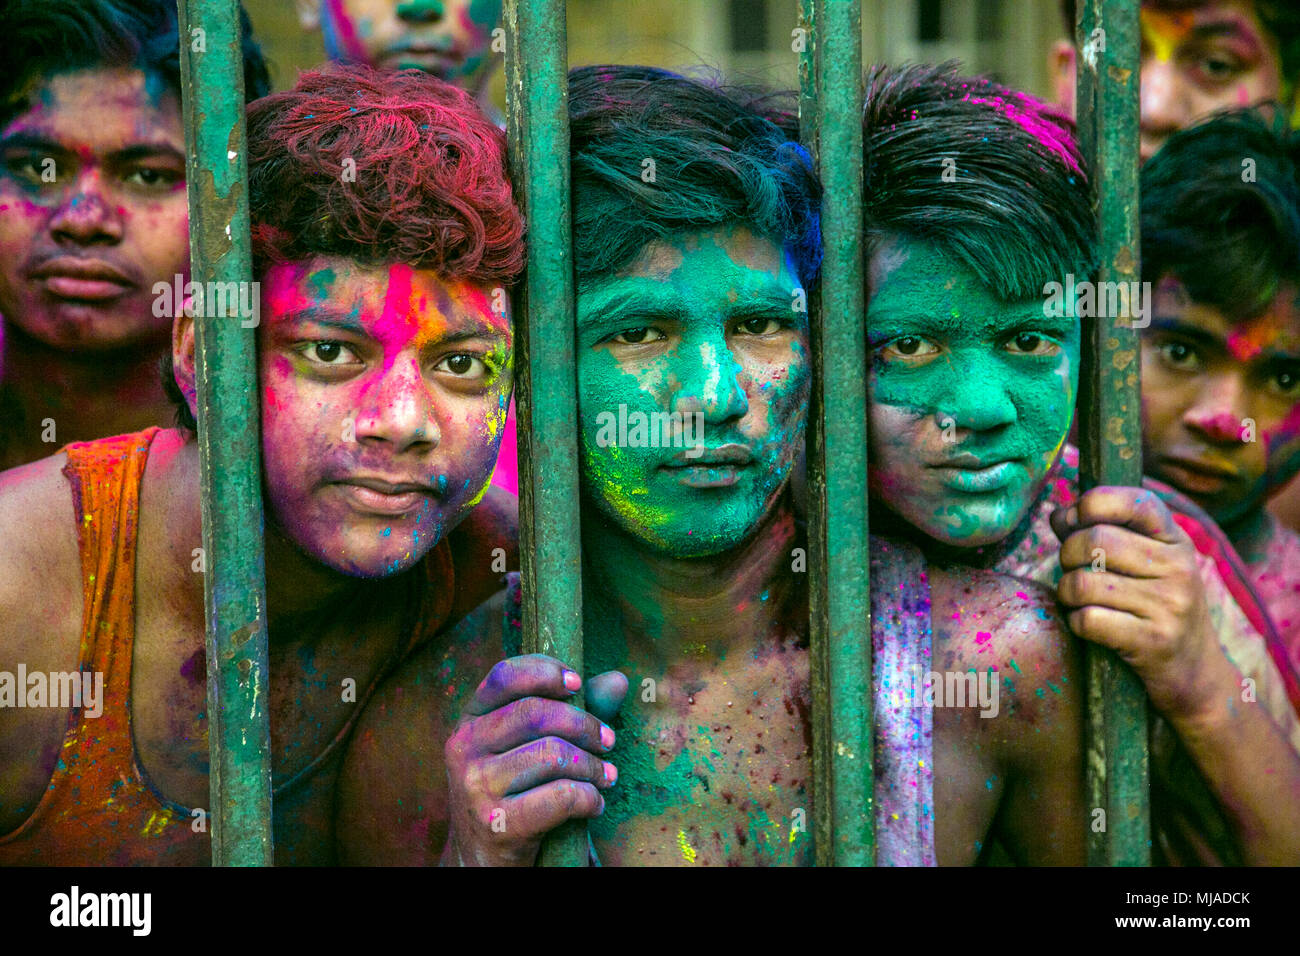 Boys Looking Through Fence, Holi Festival, Mumbai, India Stock Photo